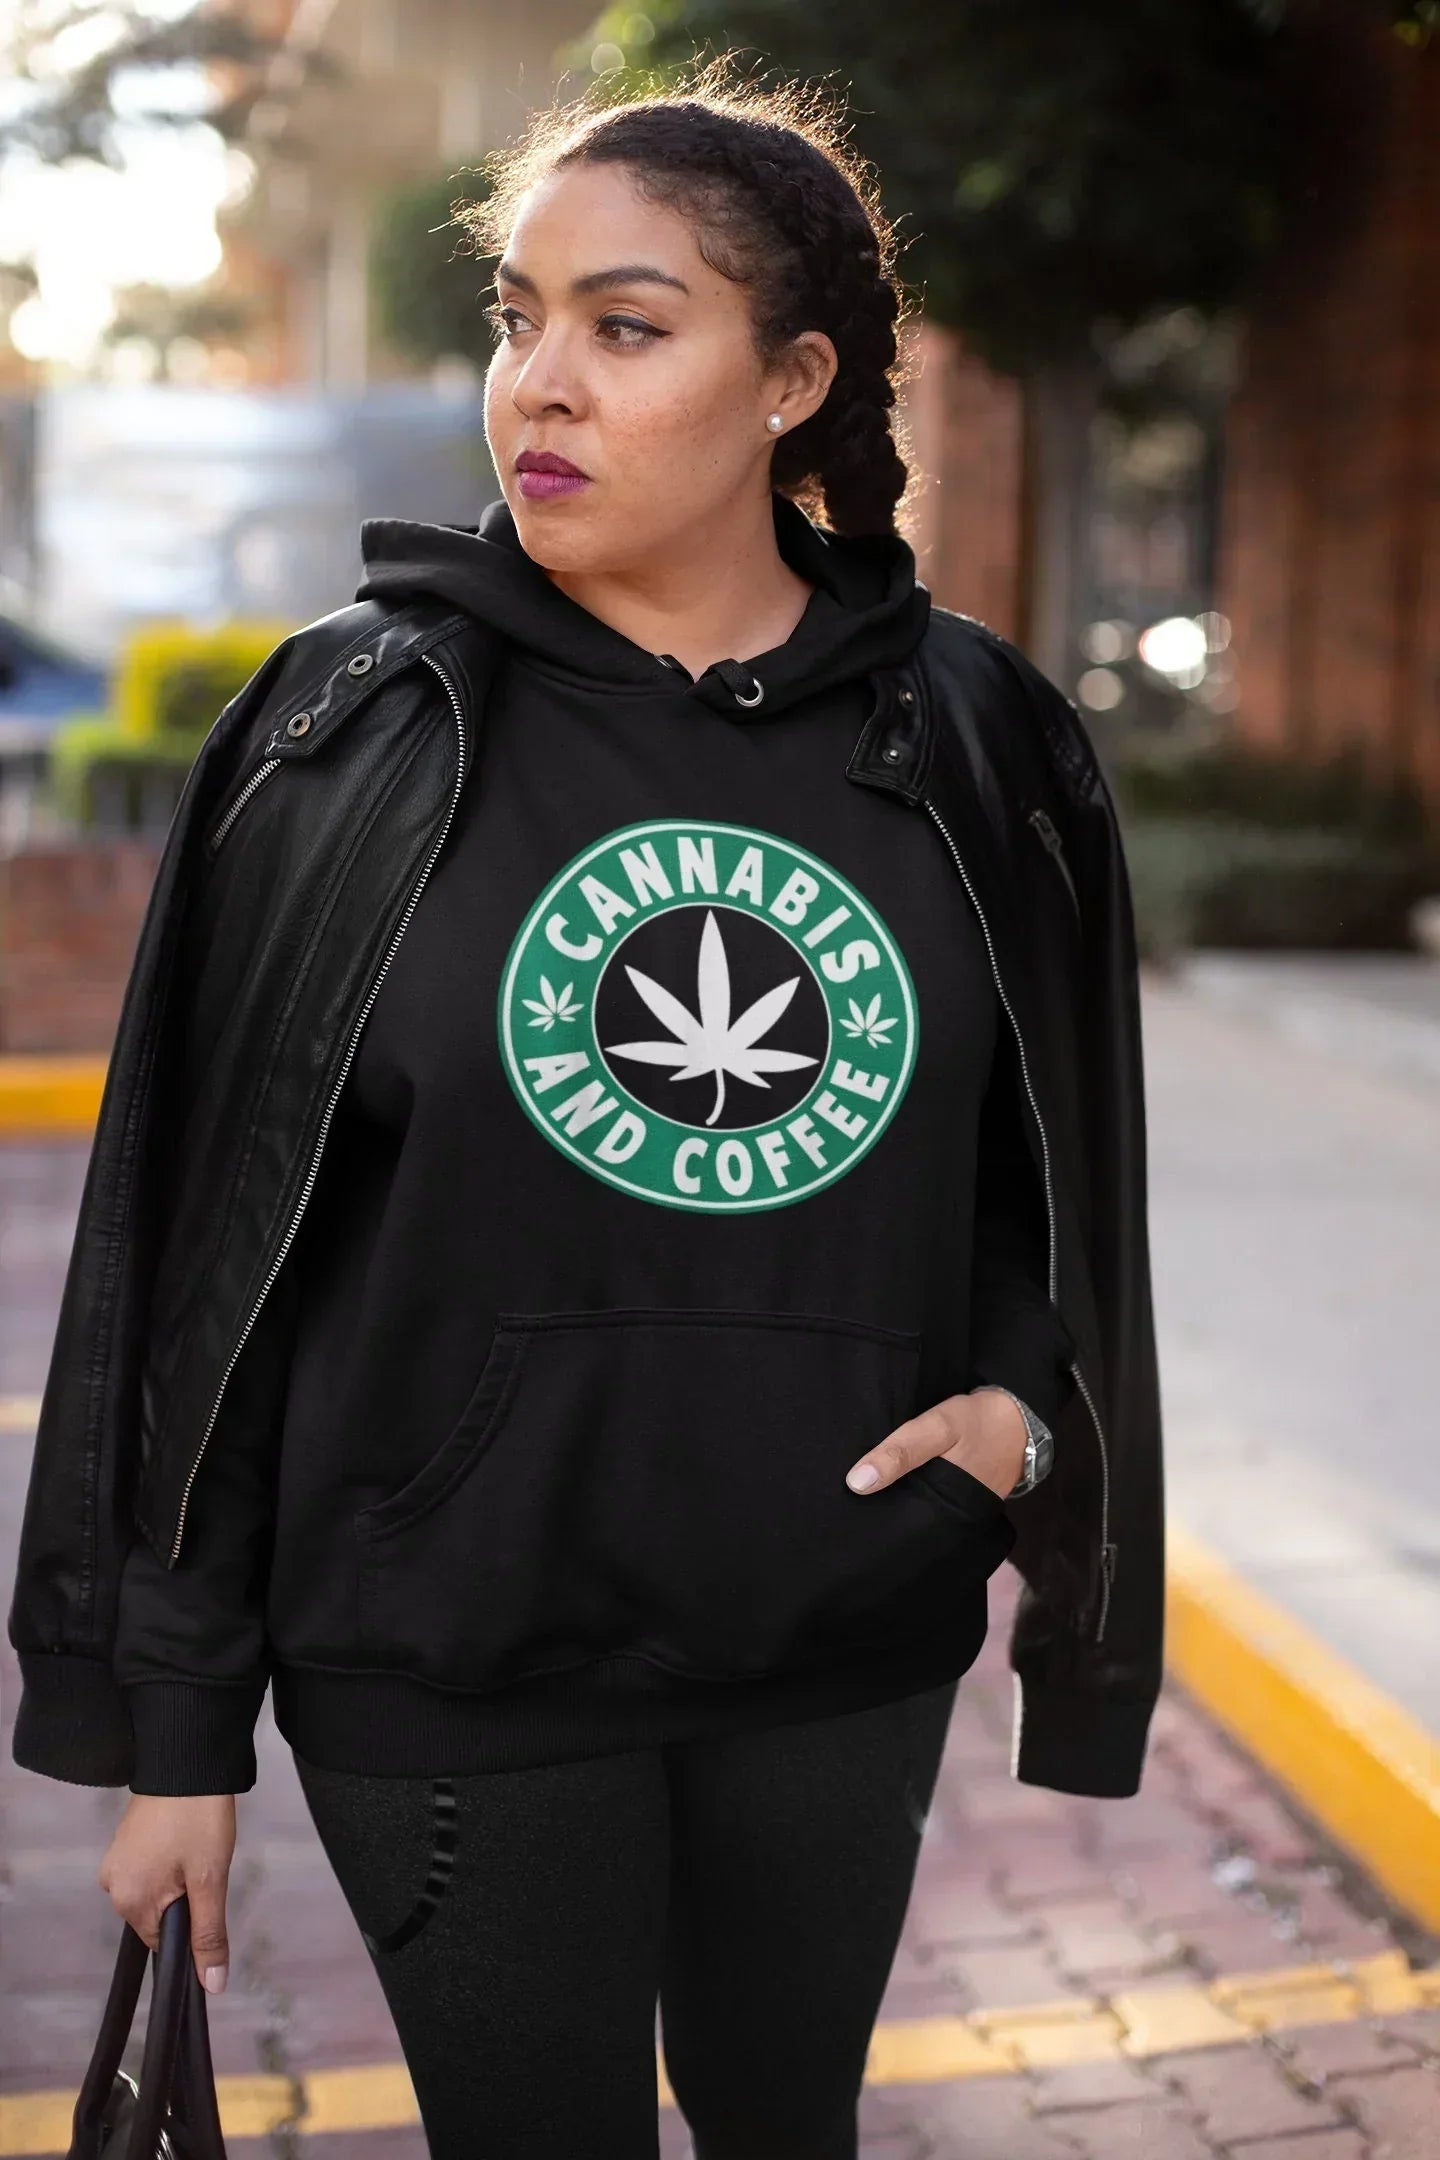 Coffee and Cannabis, Stoner Girl Shirt HMDesignStudioUS